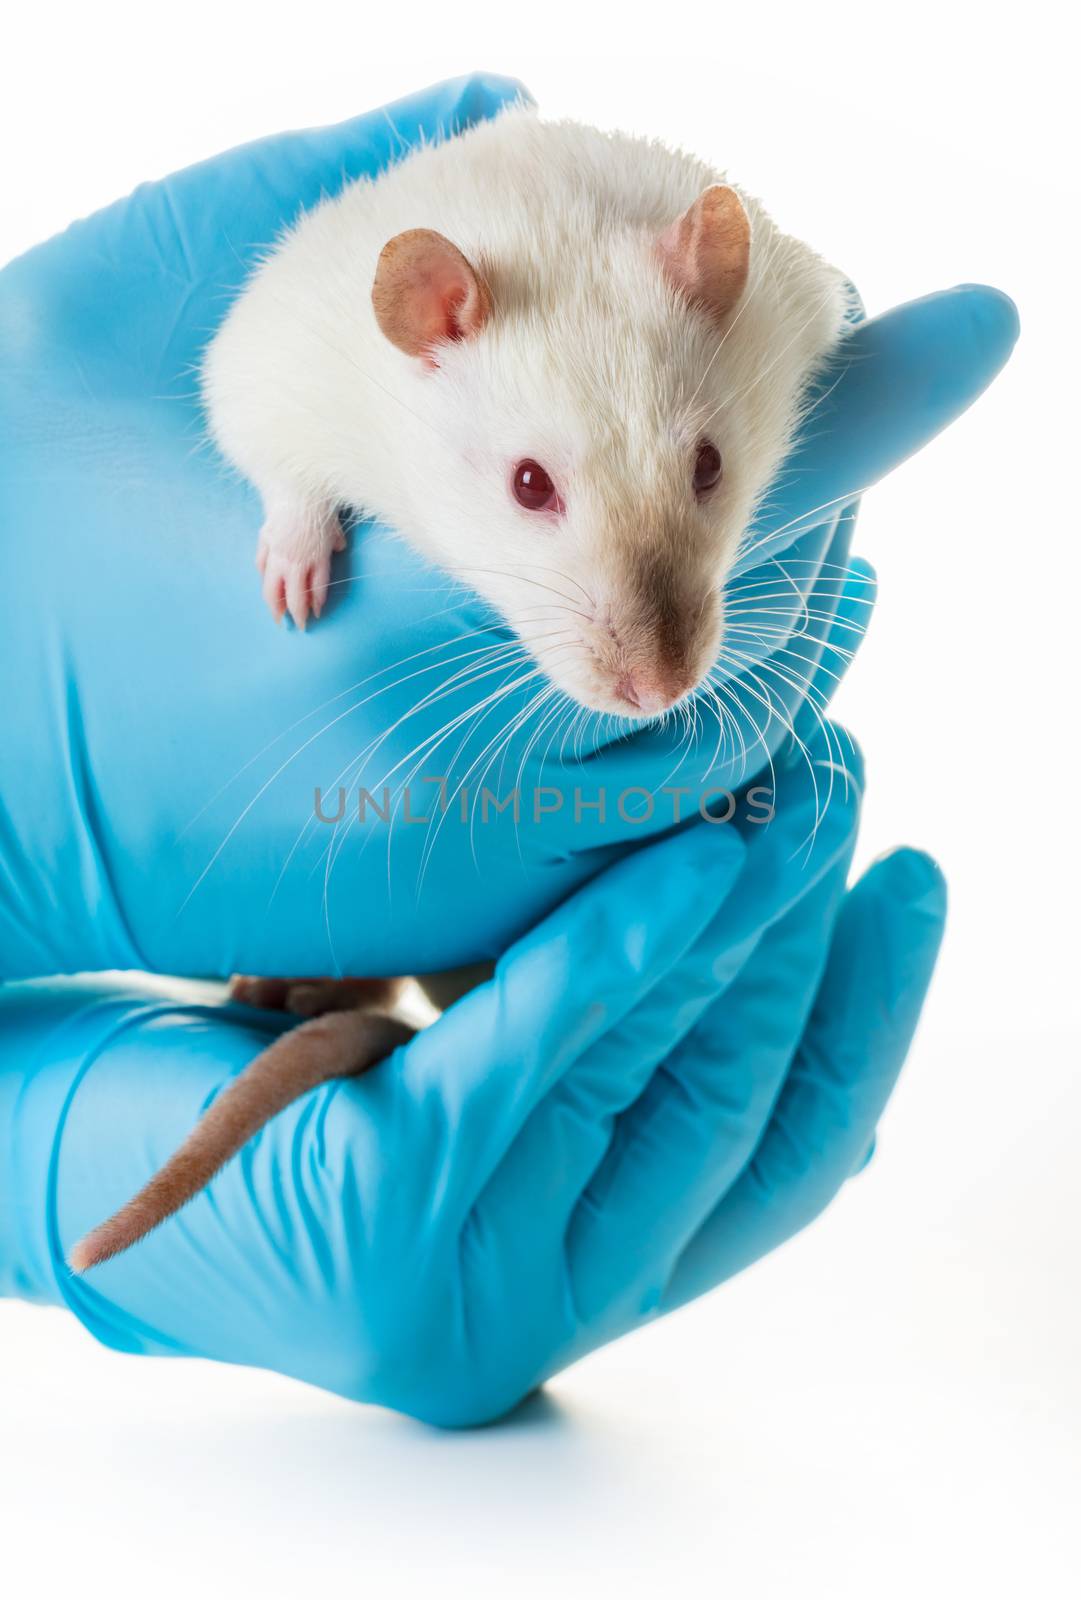 hands in medical gloves hold a rat  by MegaArt